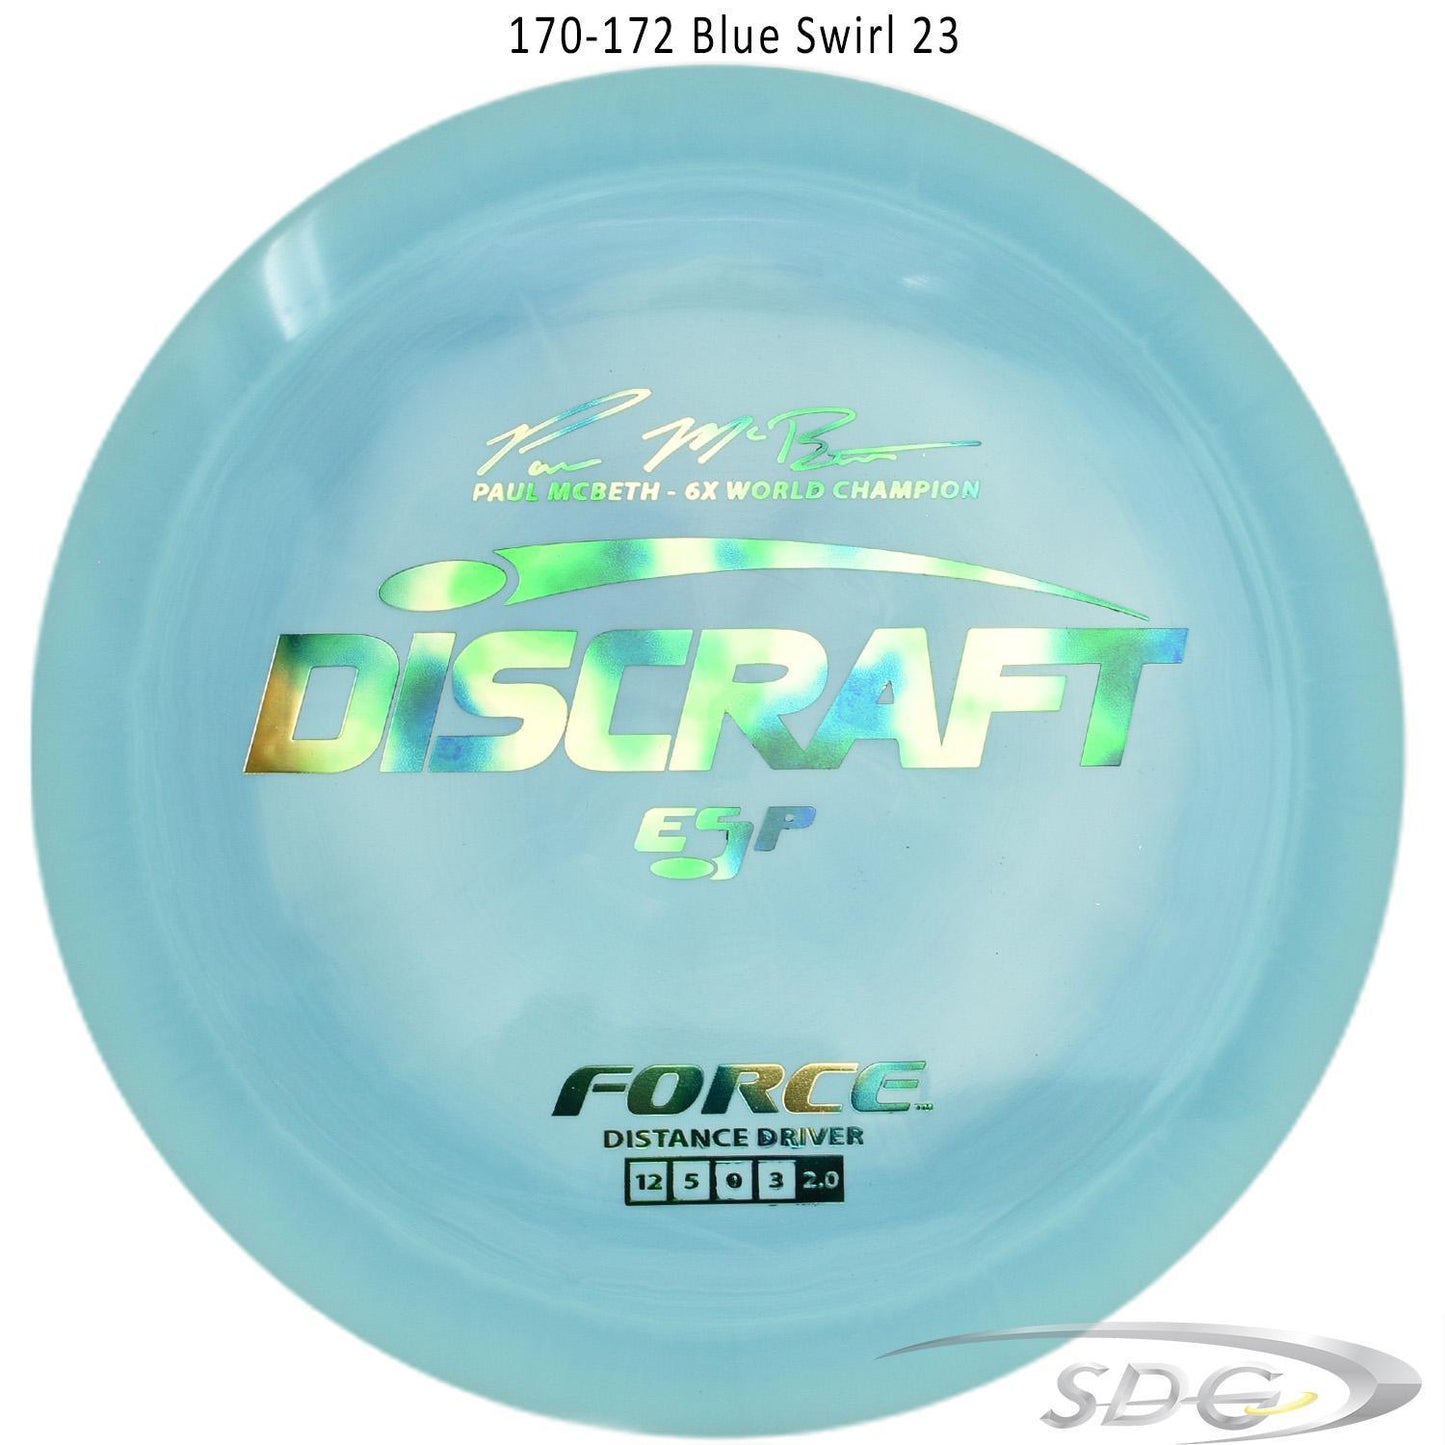 discraft-esp-force-6x-paul-mcbeth-signature-disc-golf-distance-driver 170-172 Blue Swirl 23 